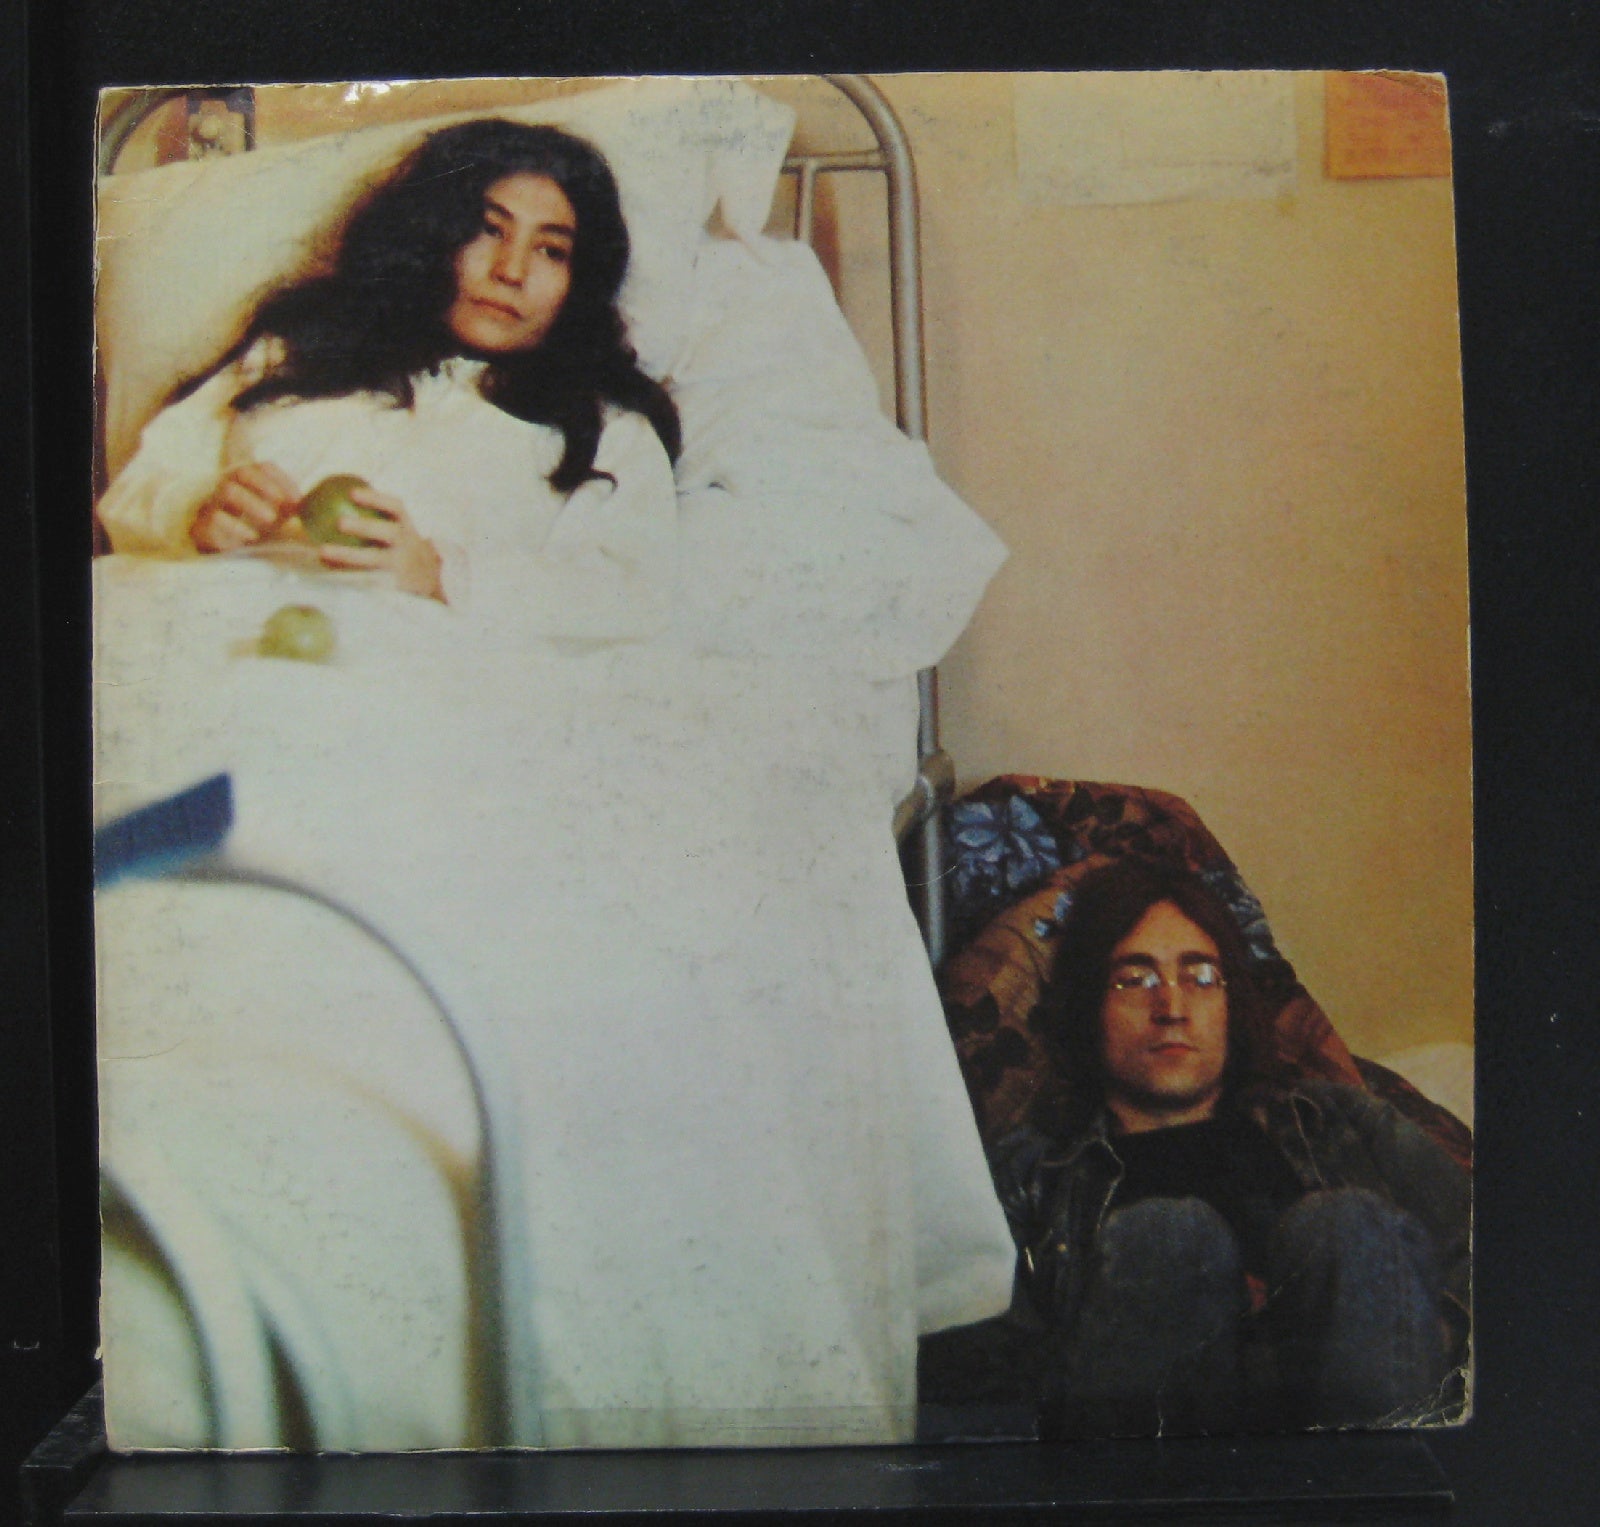 John Lennon / Yoko Ono – Unfinished Music No. 2: Life With The Lions - VG+ LP Record 1969 Zapple USA Vinyl & Inner - Rock / Avantgarde / Experimental / Electronic